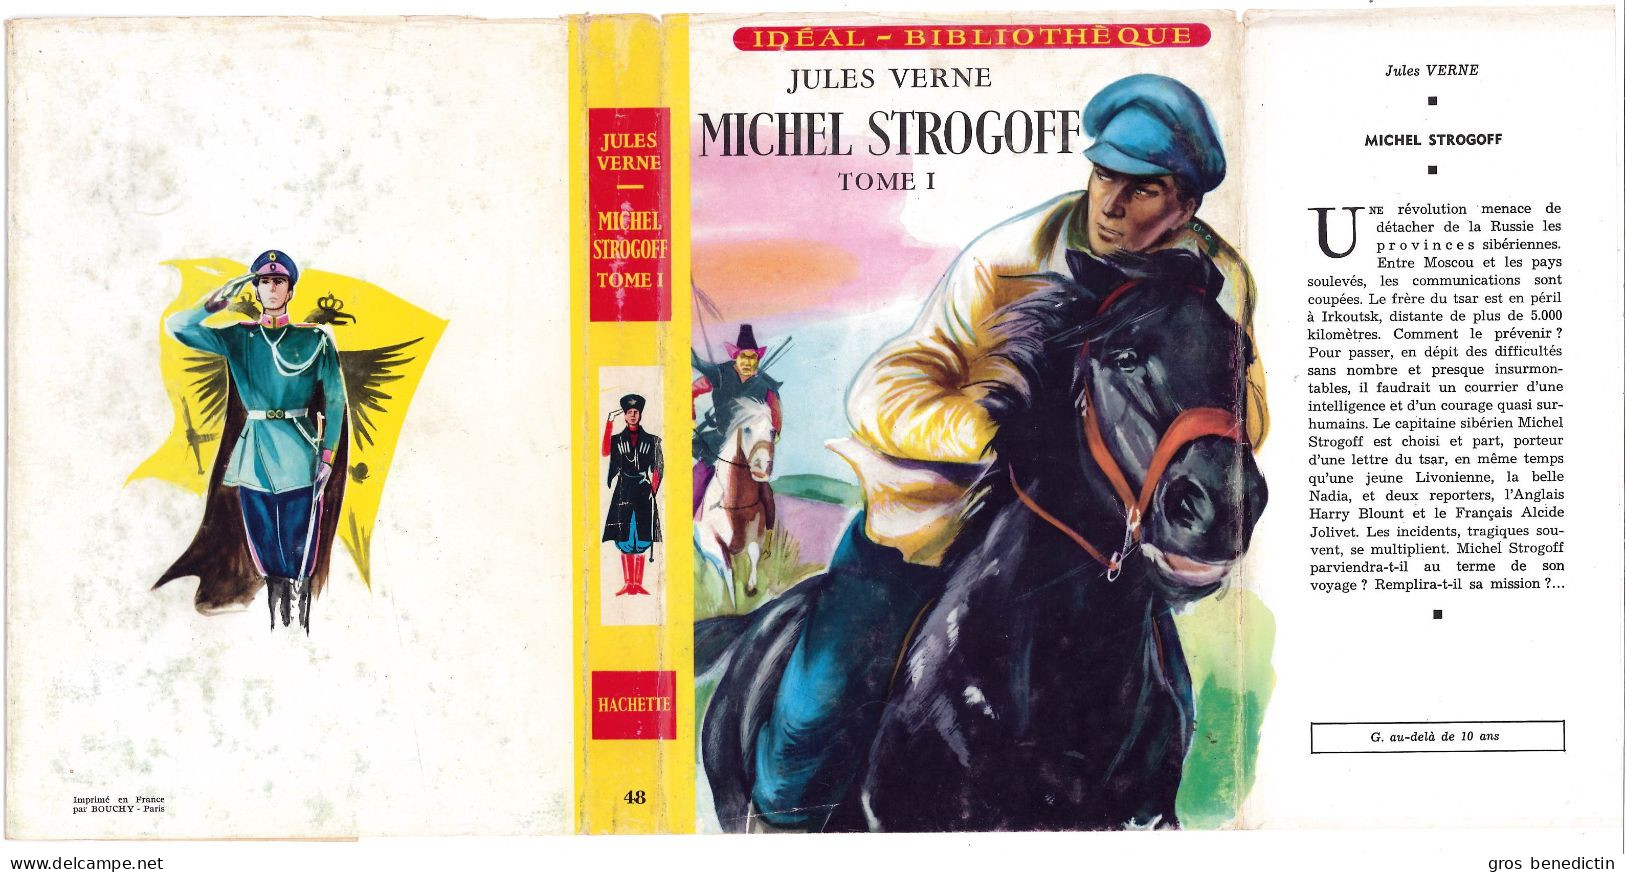 Hachette - Idéal Bibliothèque - Jules Verne - "Michel Strogoff - Tome 1" - 1965